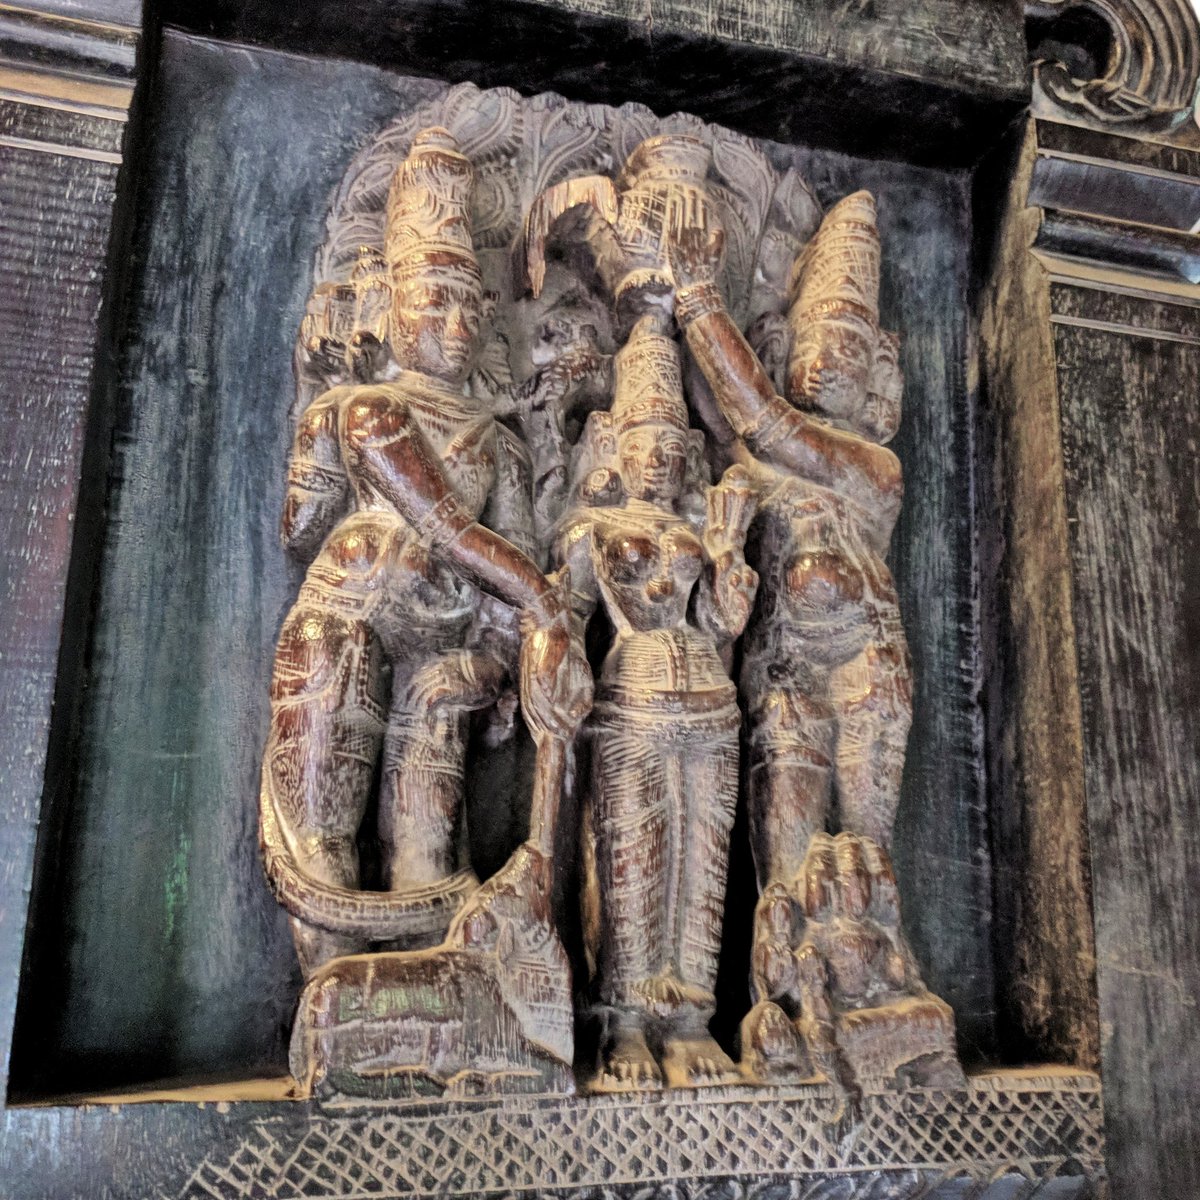 Some Kalyanasundaramurthi images show Vishnu, giving Parvati away by pouring water from a pot on their joined hands. Pic 3. Meenakshi temple, Madurai, Pic 4. Kerala Folklore Museum, Cochin. Pic 5. Chola bronze from Thiruvengadu, Thanjavur Museum  #AksharArt  #ArtByTheLetter